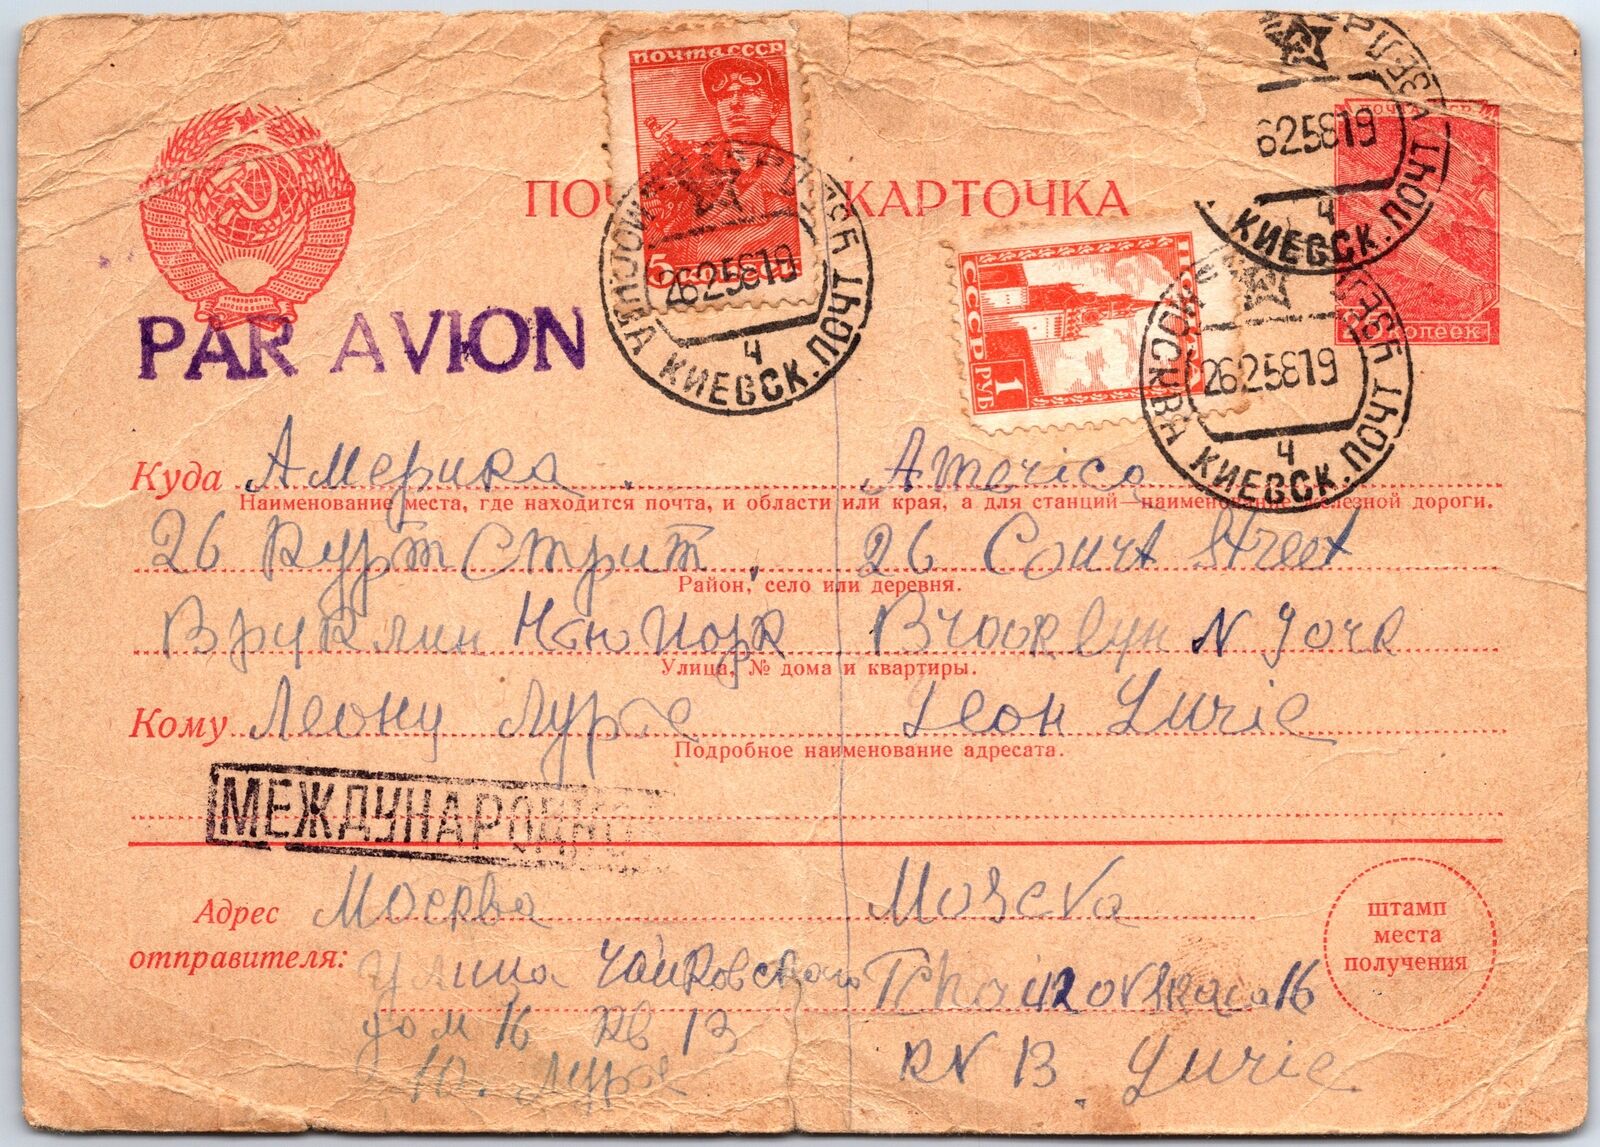 CONTINENTAL SIZE POSTAL CARD: KIEV UKRAINE (U.S.S.R) TO BROOKLYN NEW YORK 1919